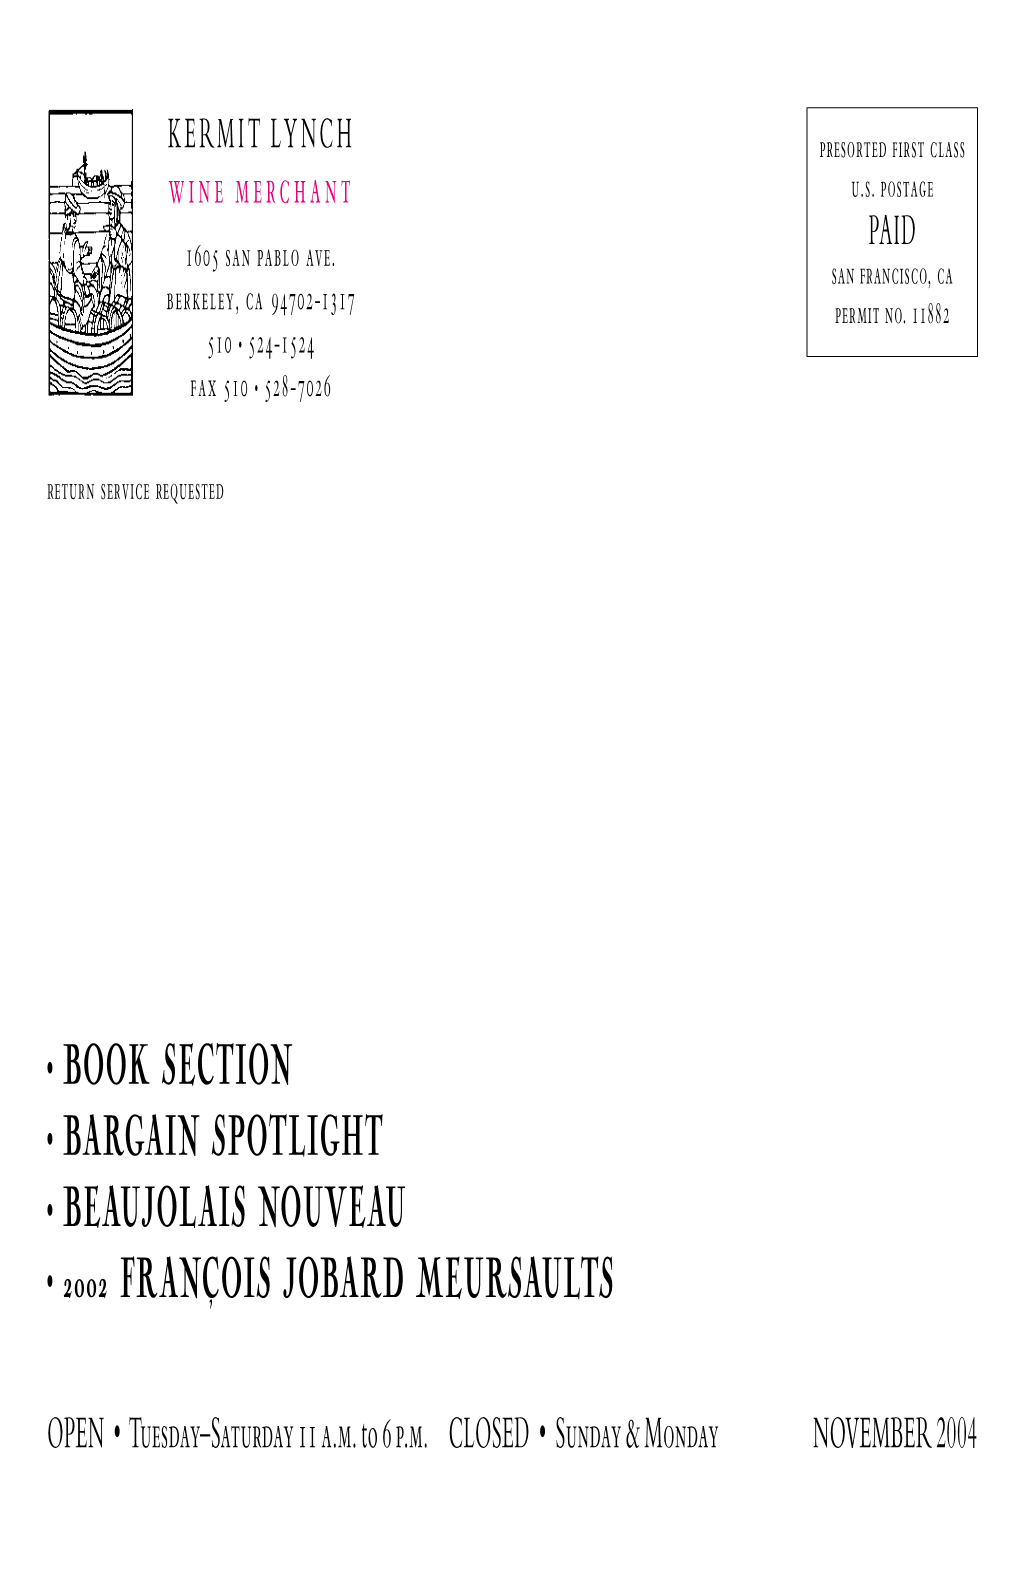 November Book Section, Bargain Spotlight, Beaujolais Nouveau